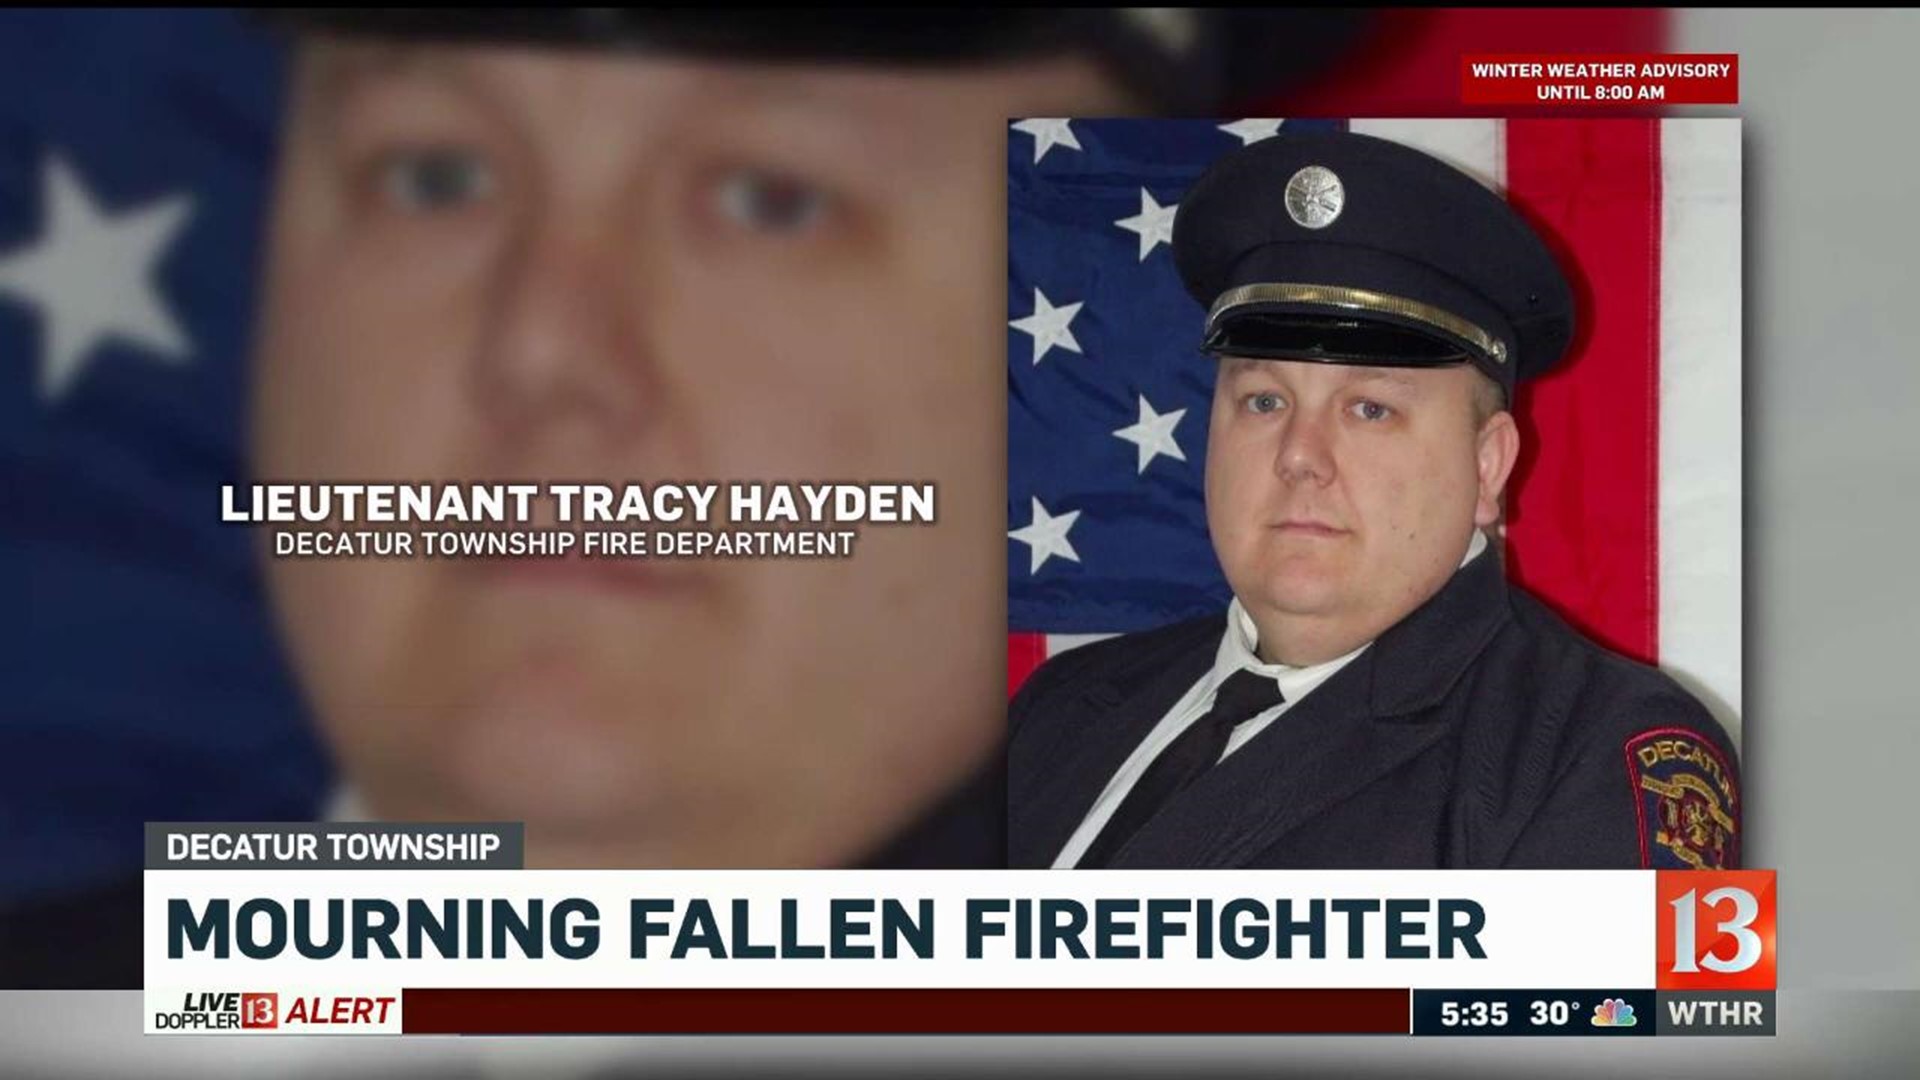 Mourning fallen firefighter